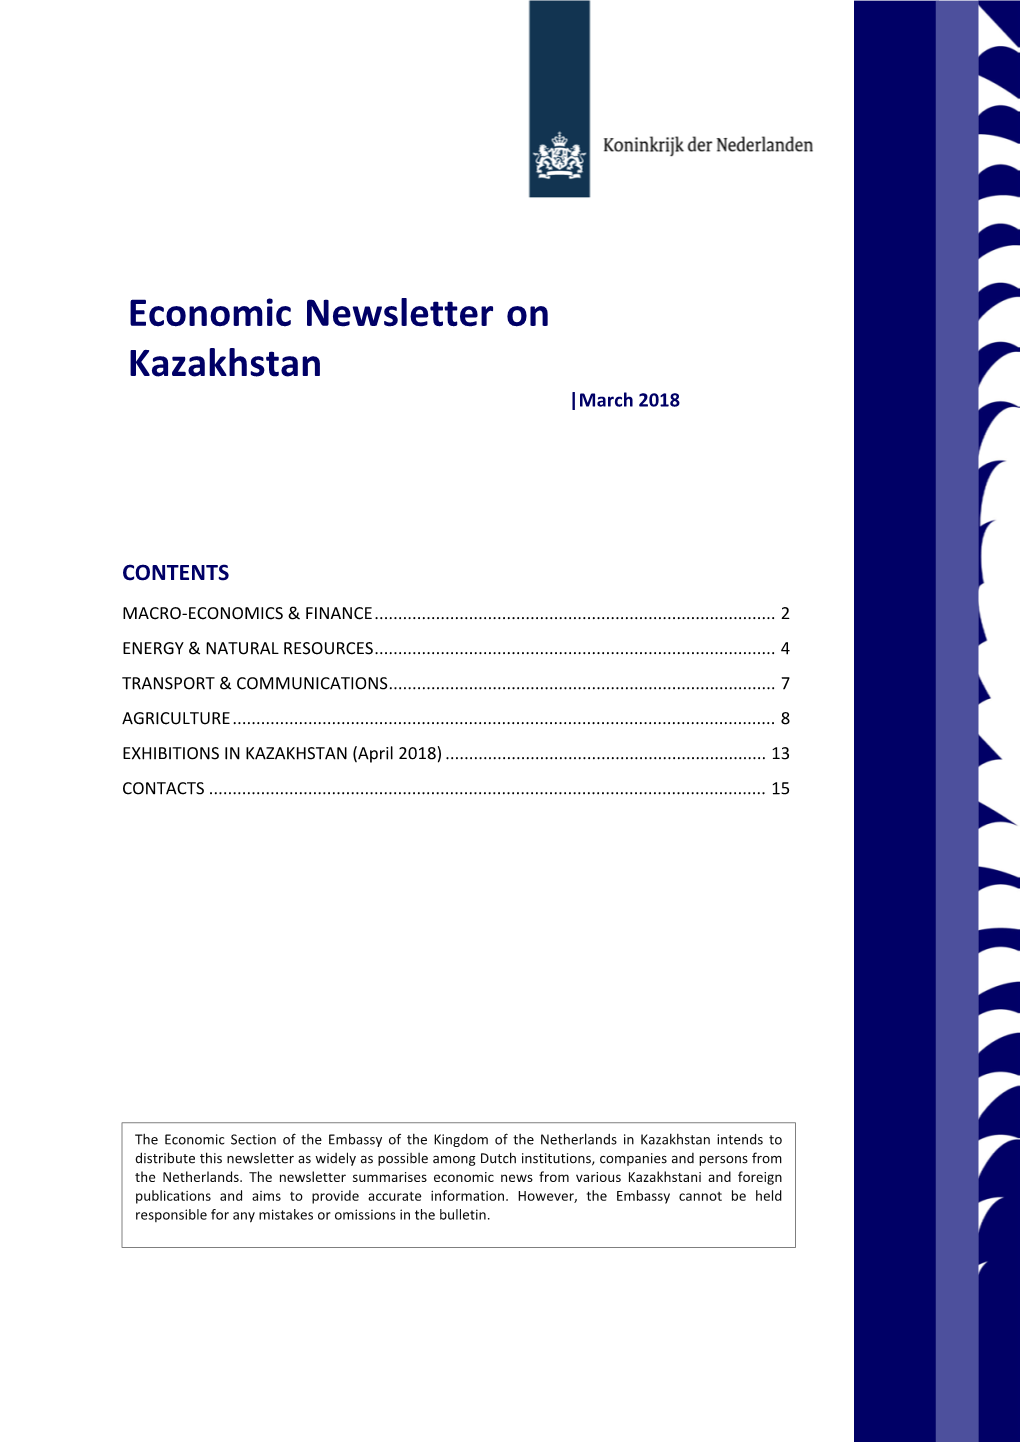 Economic Newsletter on Kazakhstan |March 2018